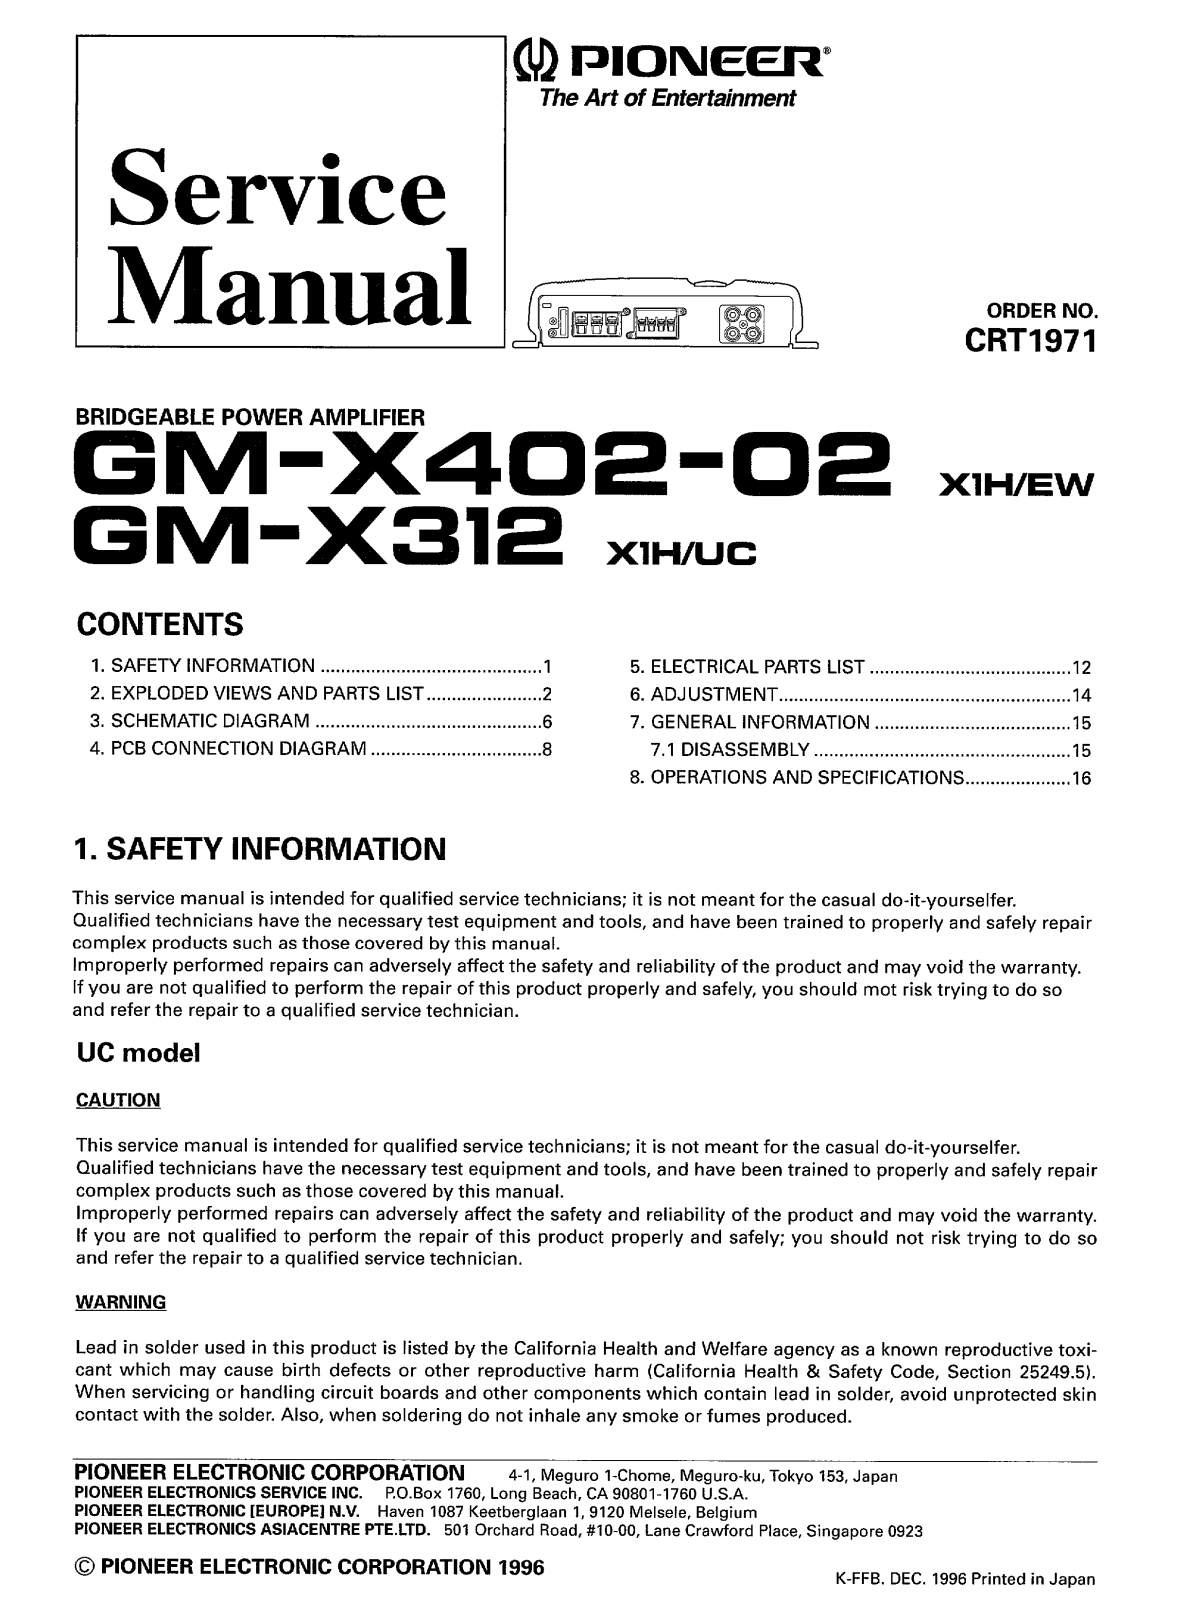 Pioneer GMX-312, GMX-402 Service manual